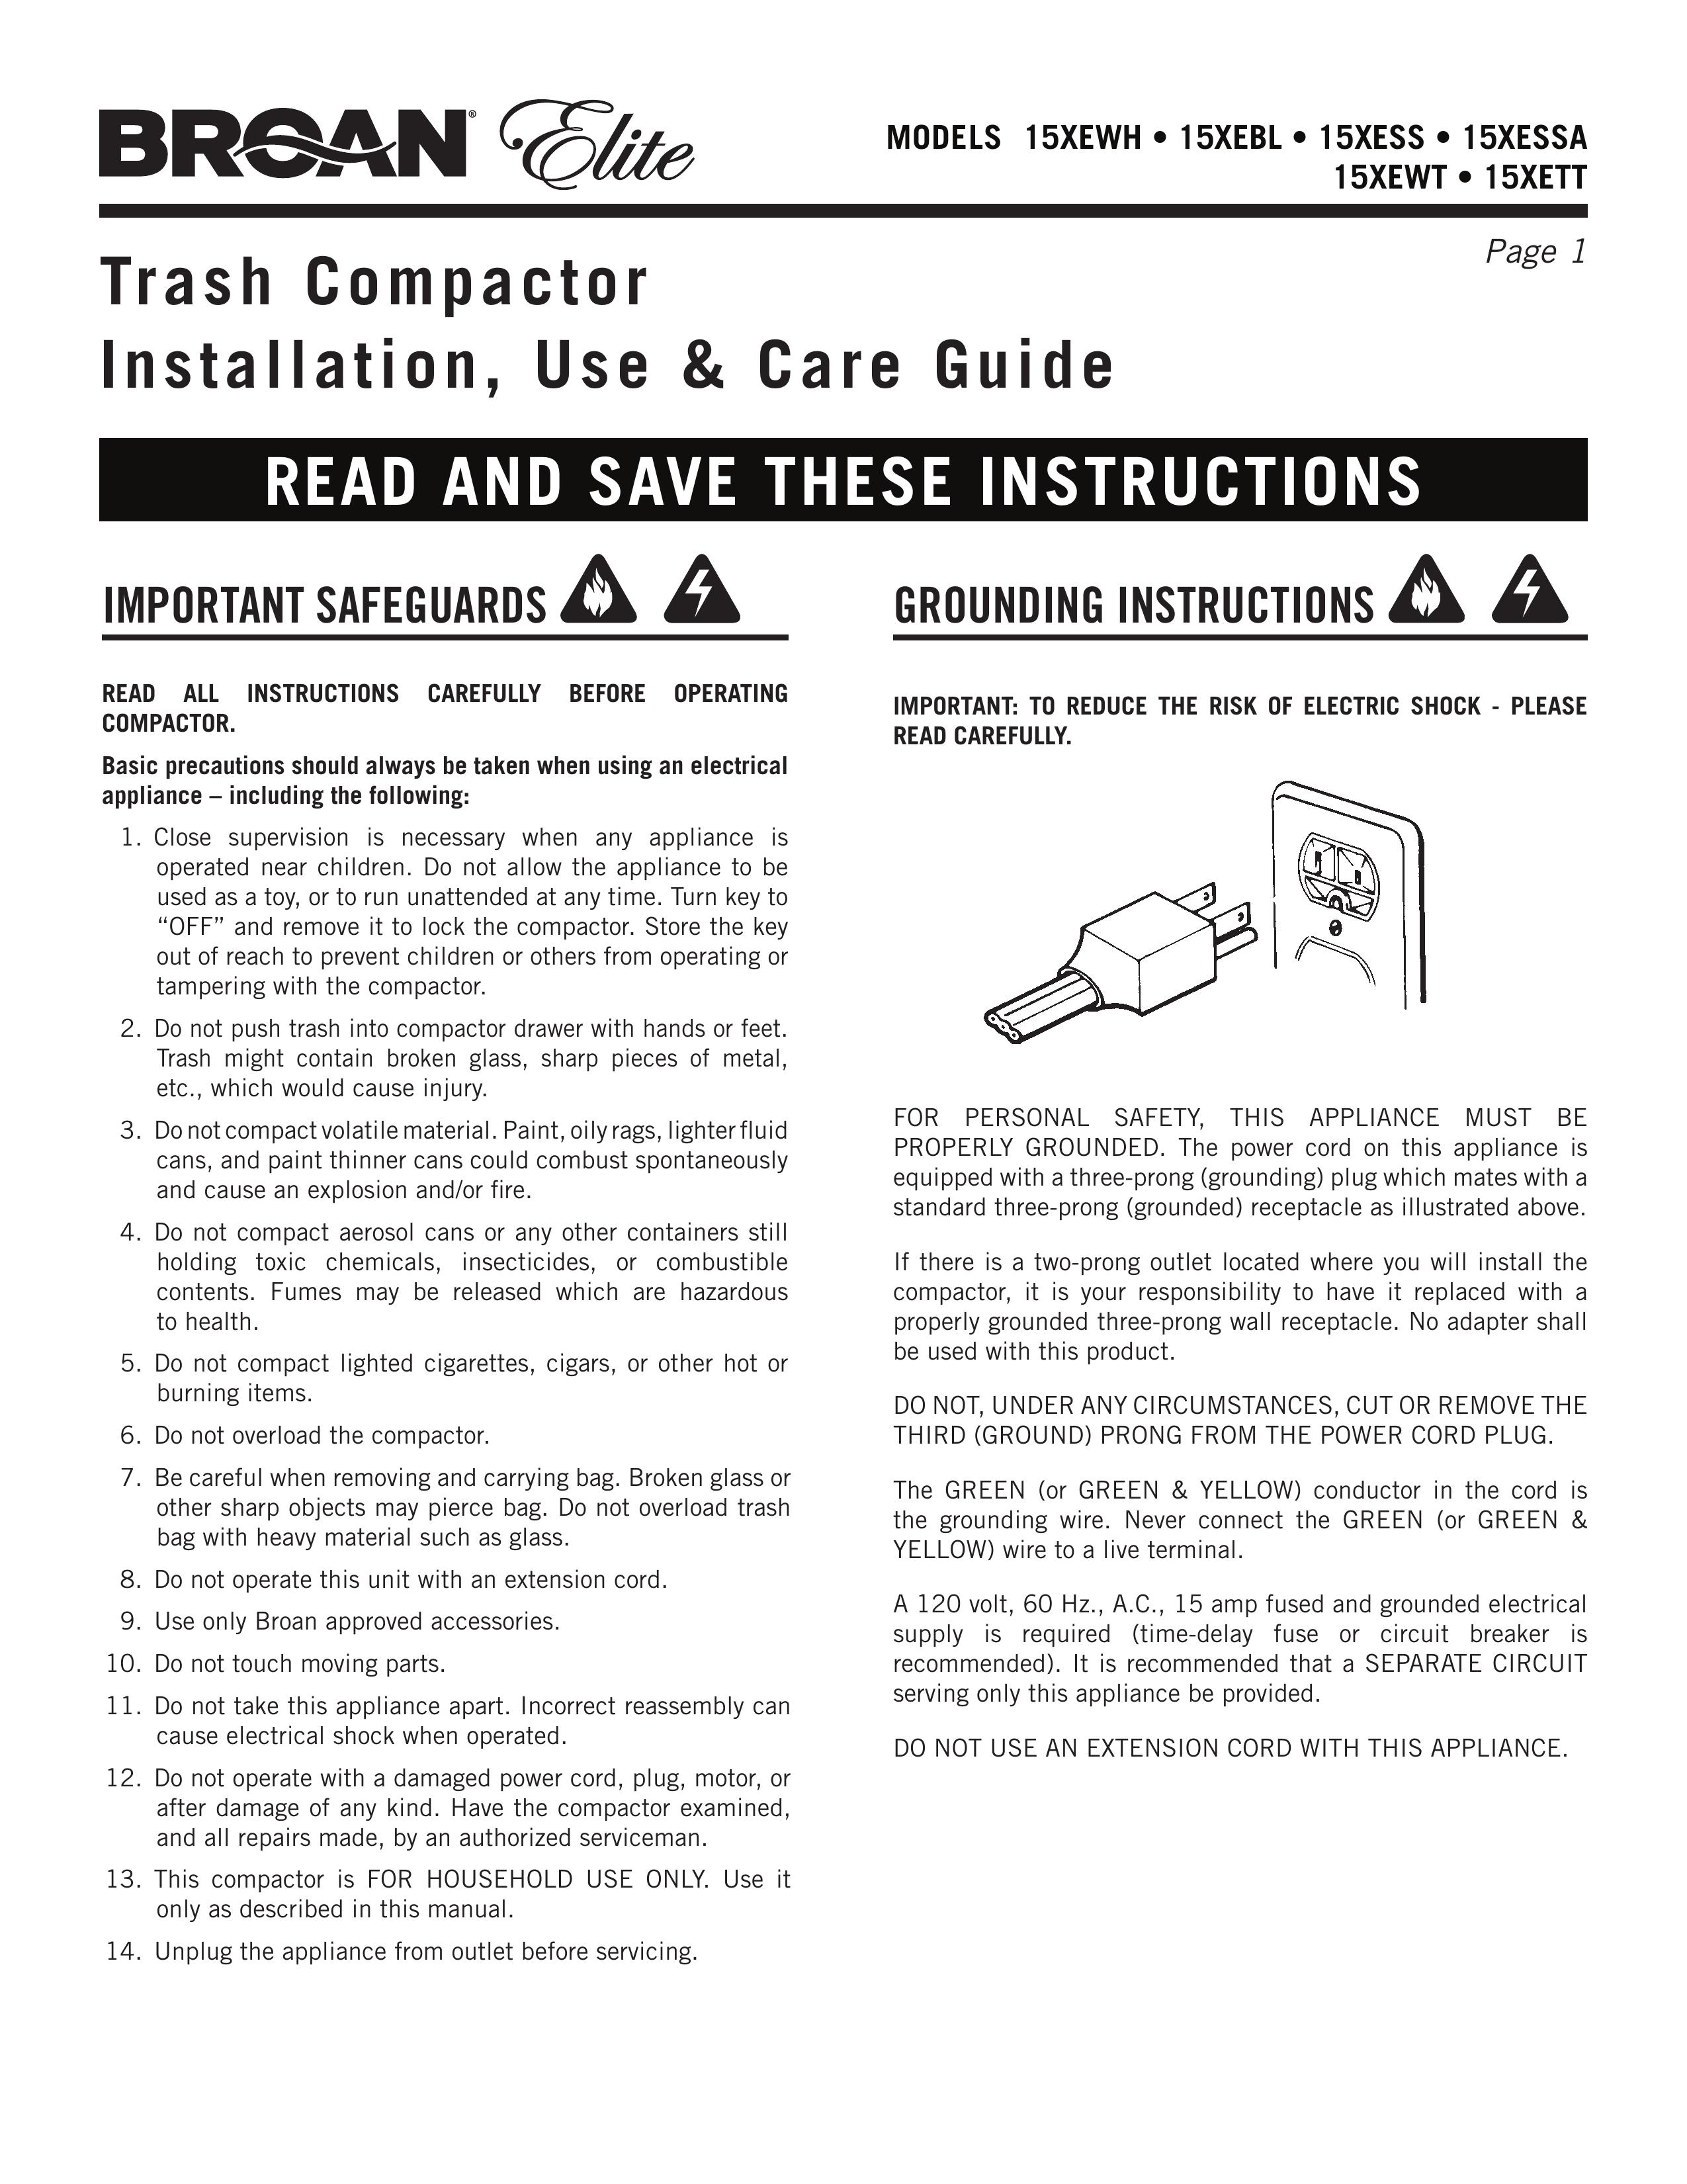 Broan 15XeBl Trash Compactor User Manual